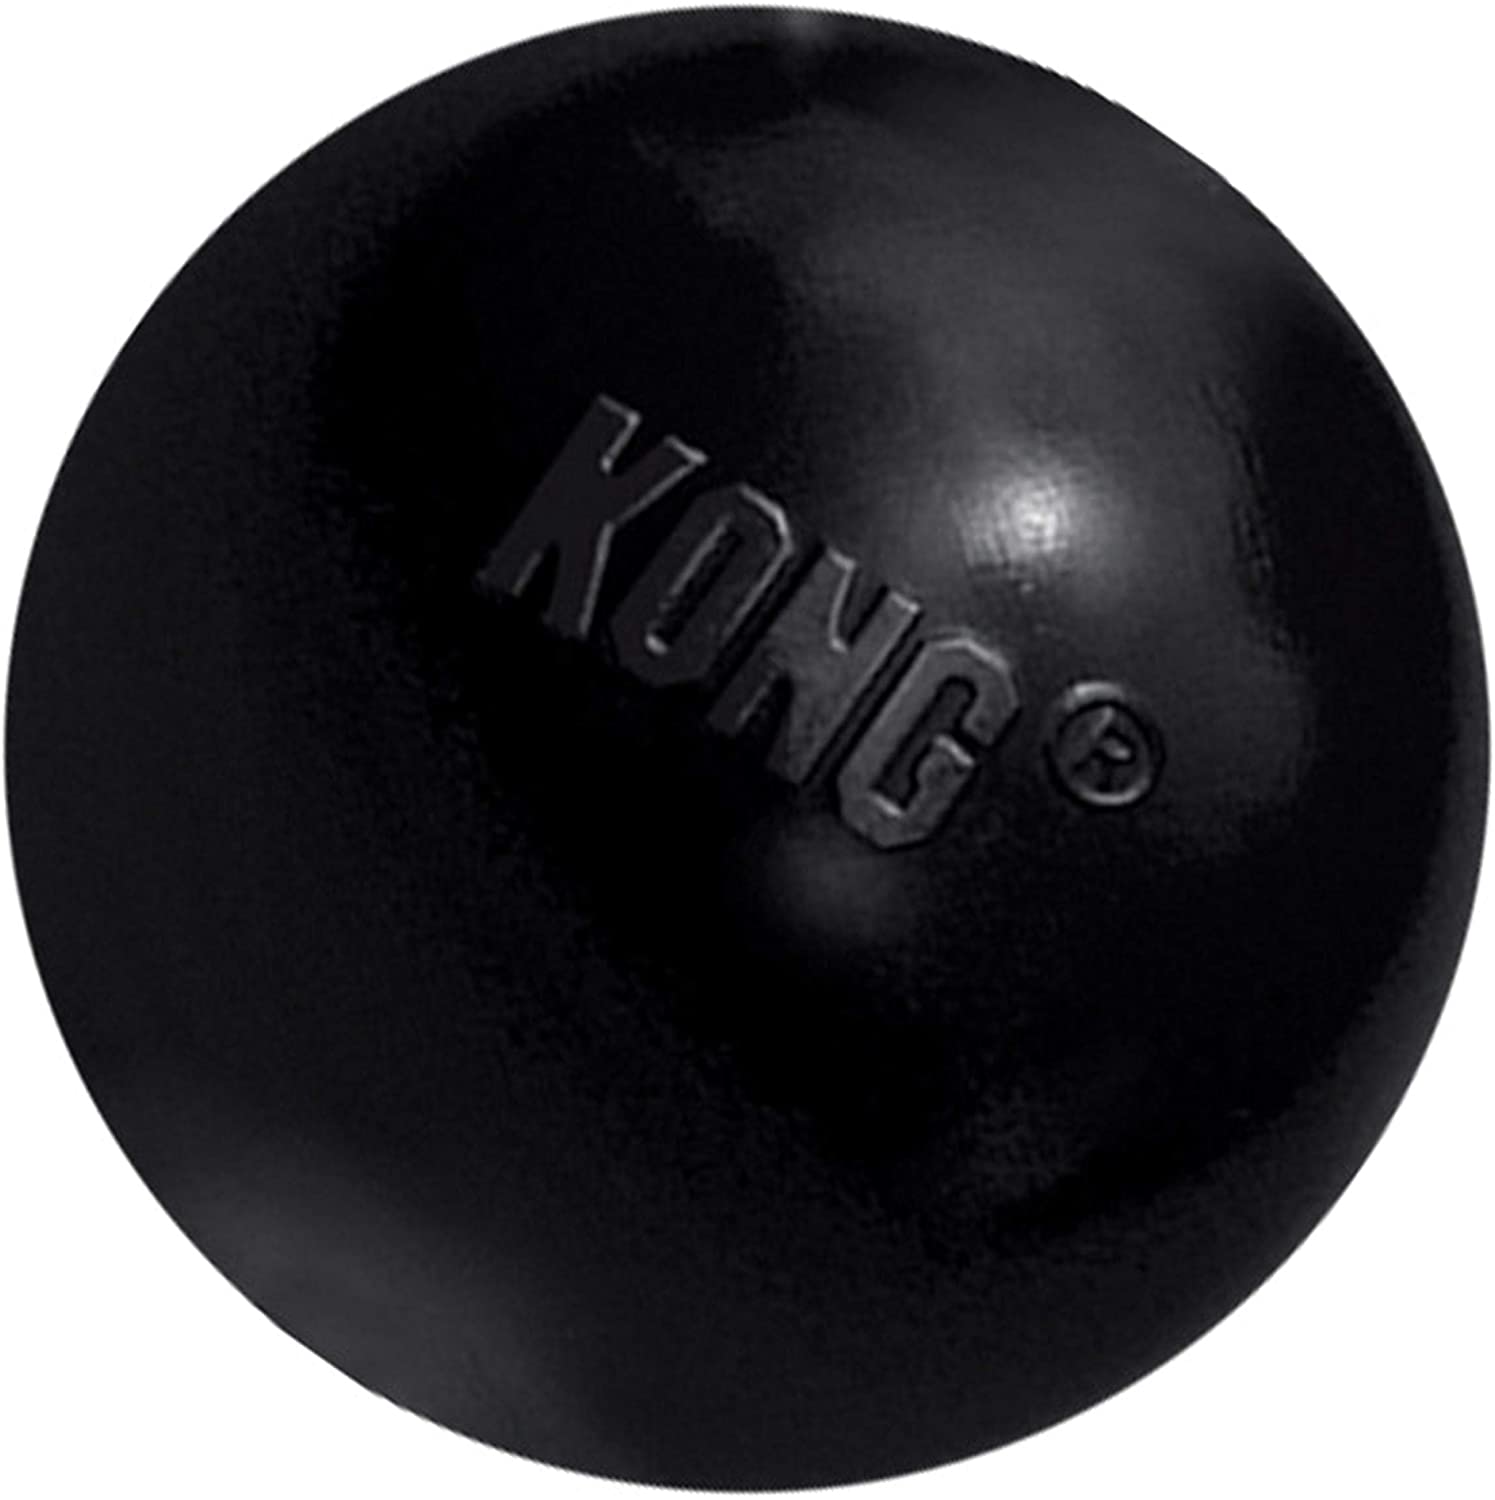 2. KONG Extreme Ball Dog Toy